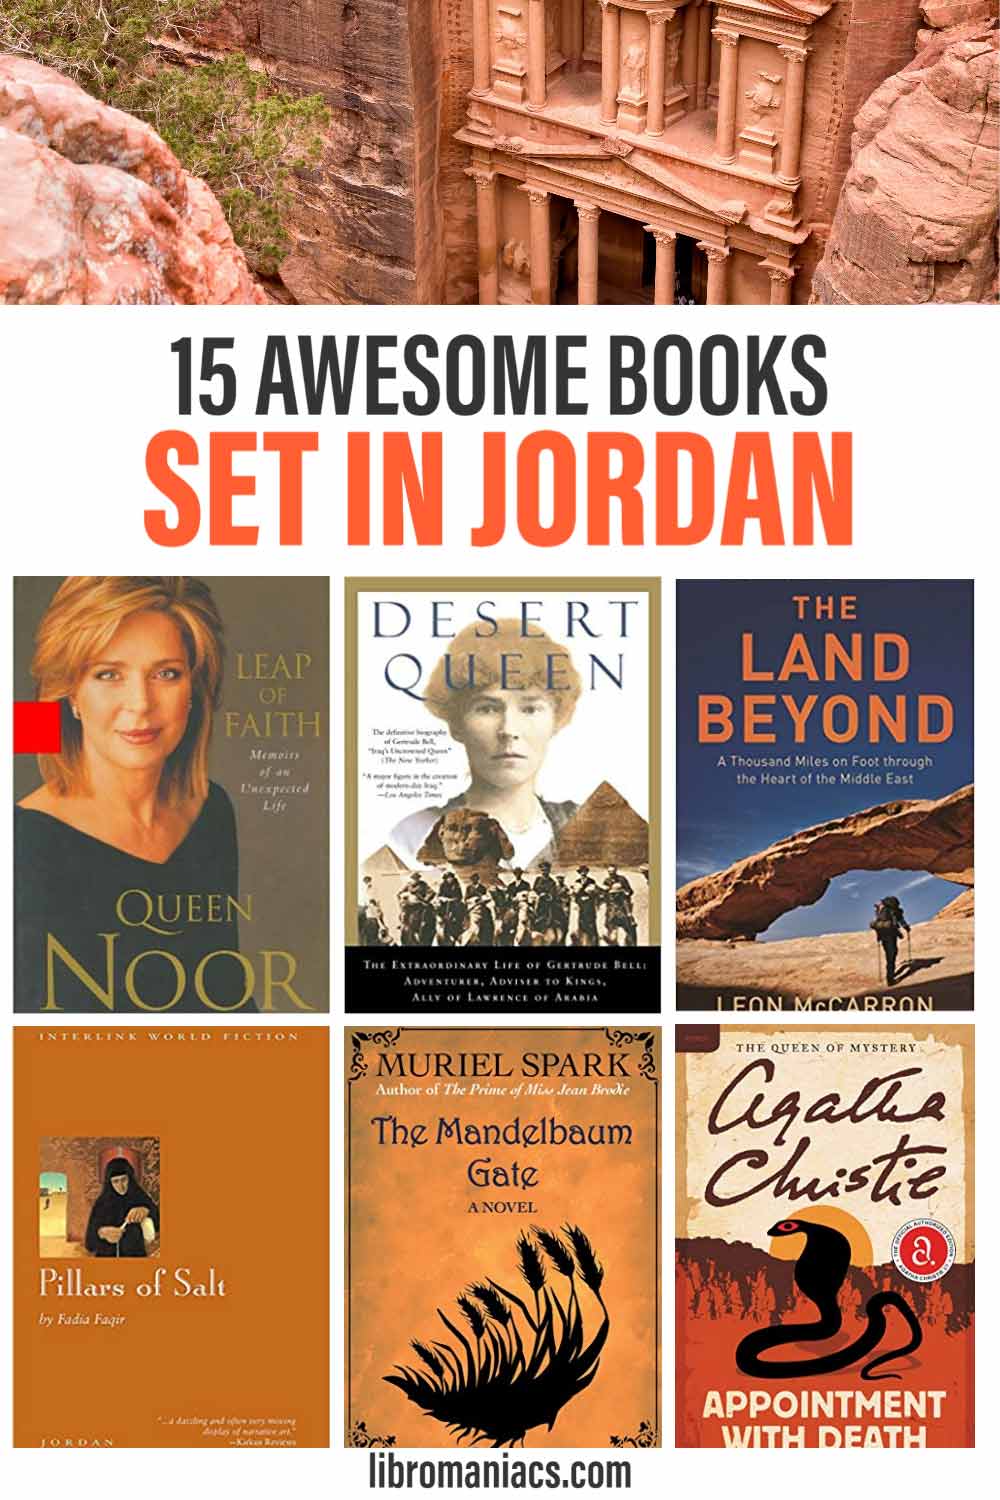 15 awesome books set in Jordan